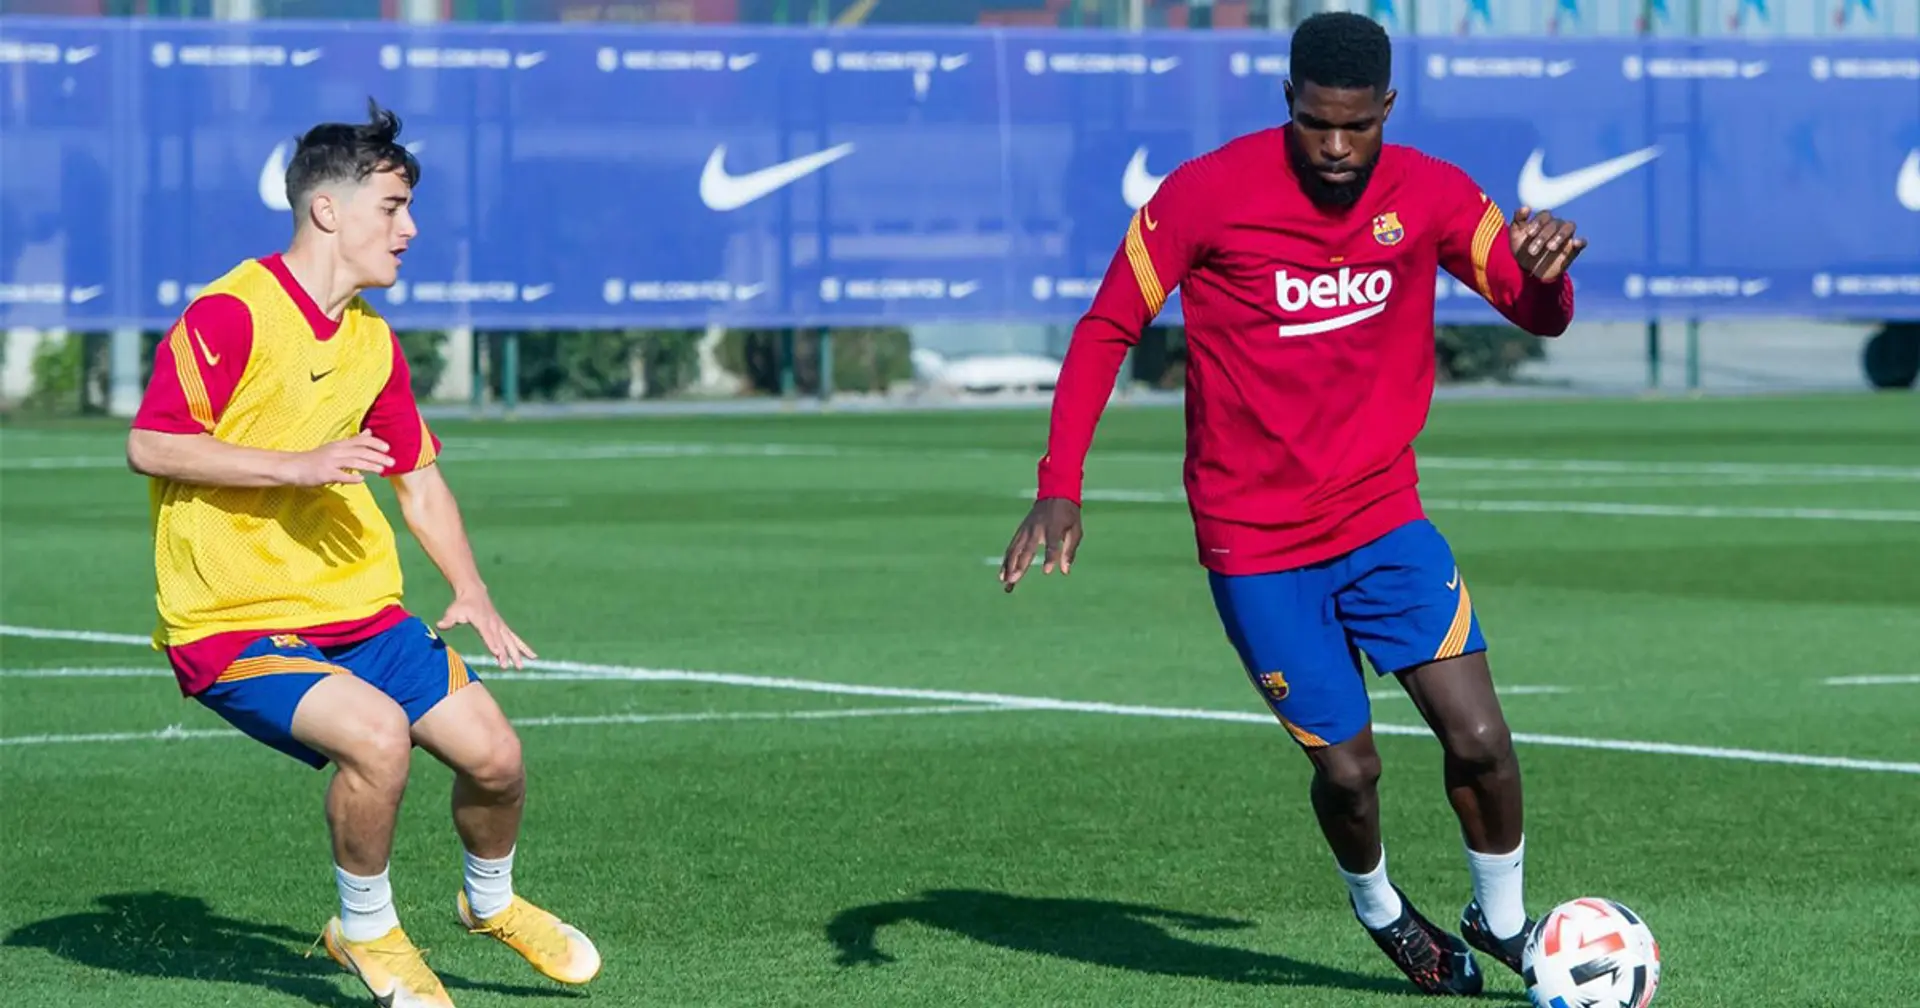 Back to school: Umtiti seen training with Barcelona B and U19 team